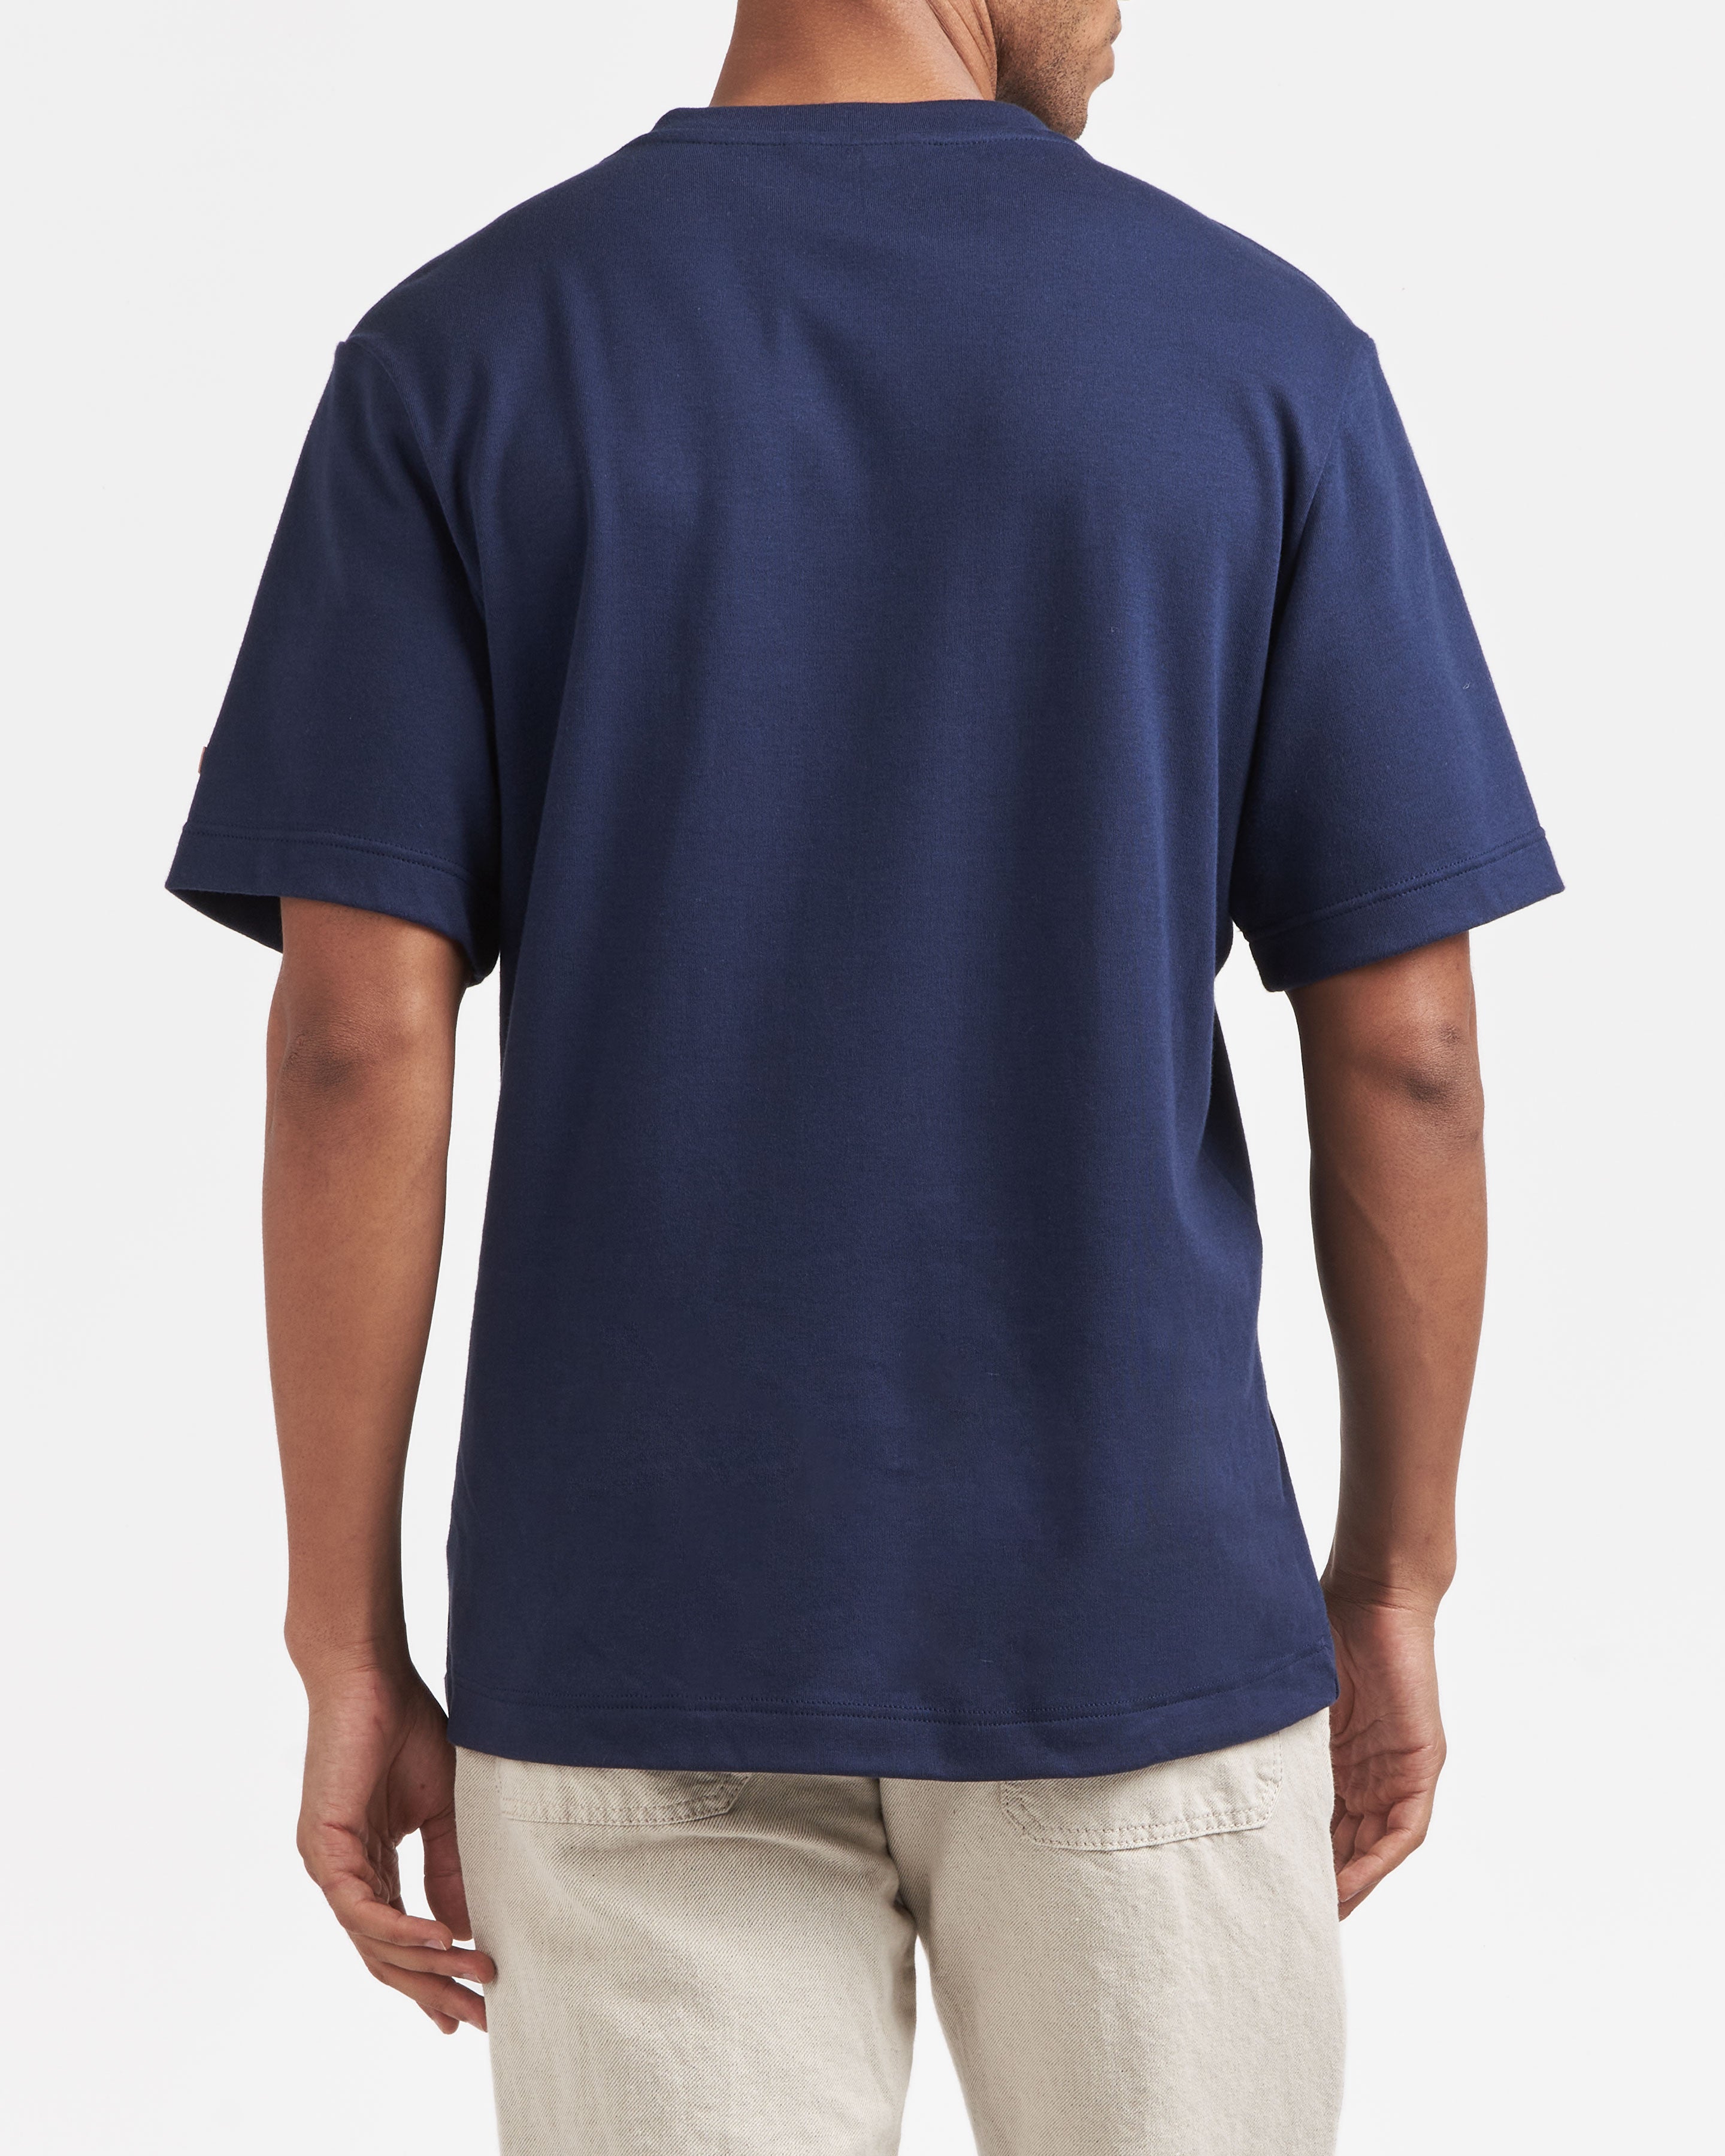 Tee-shirt en coton imprimé pour homme bleu foncé Bolf 14728A BLEU MARINE